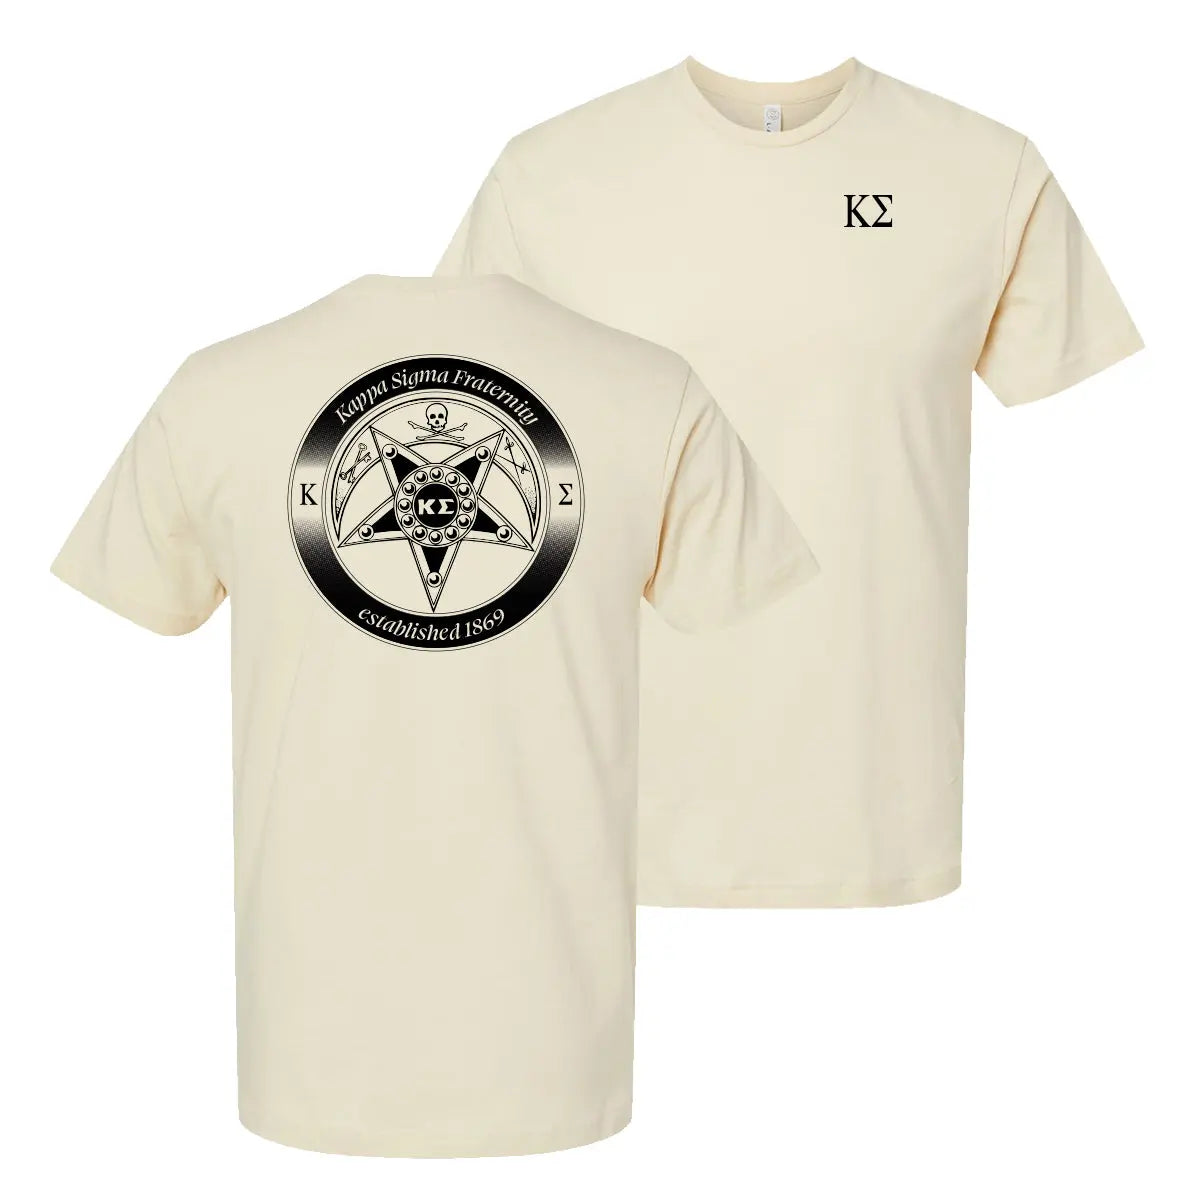 Kappa Sig Lightweight Badge Short Sleeve Tee - Kappa Sigma Official Store